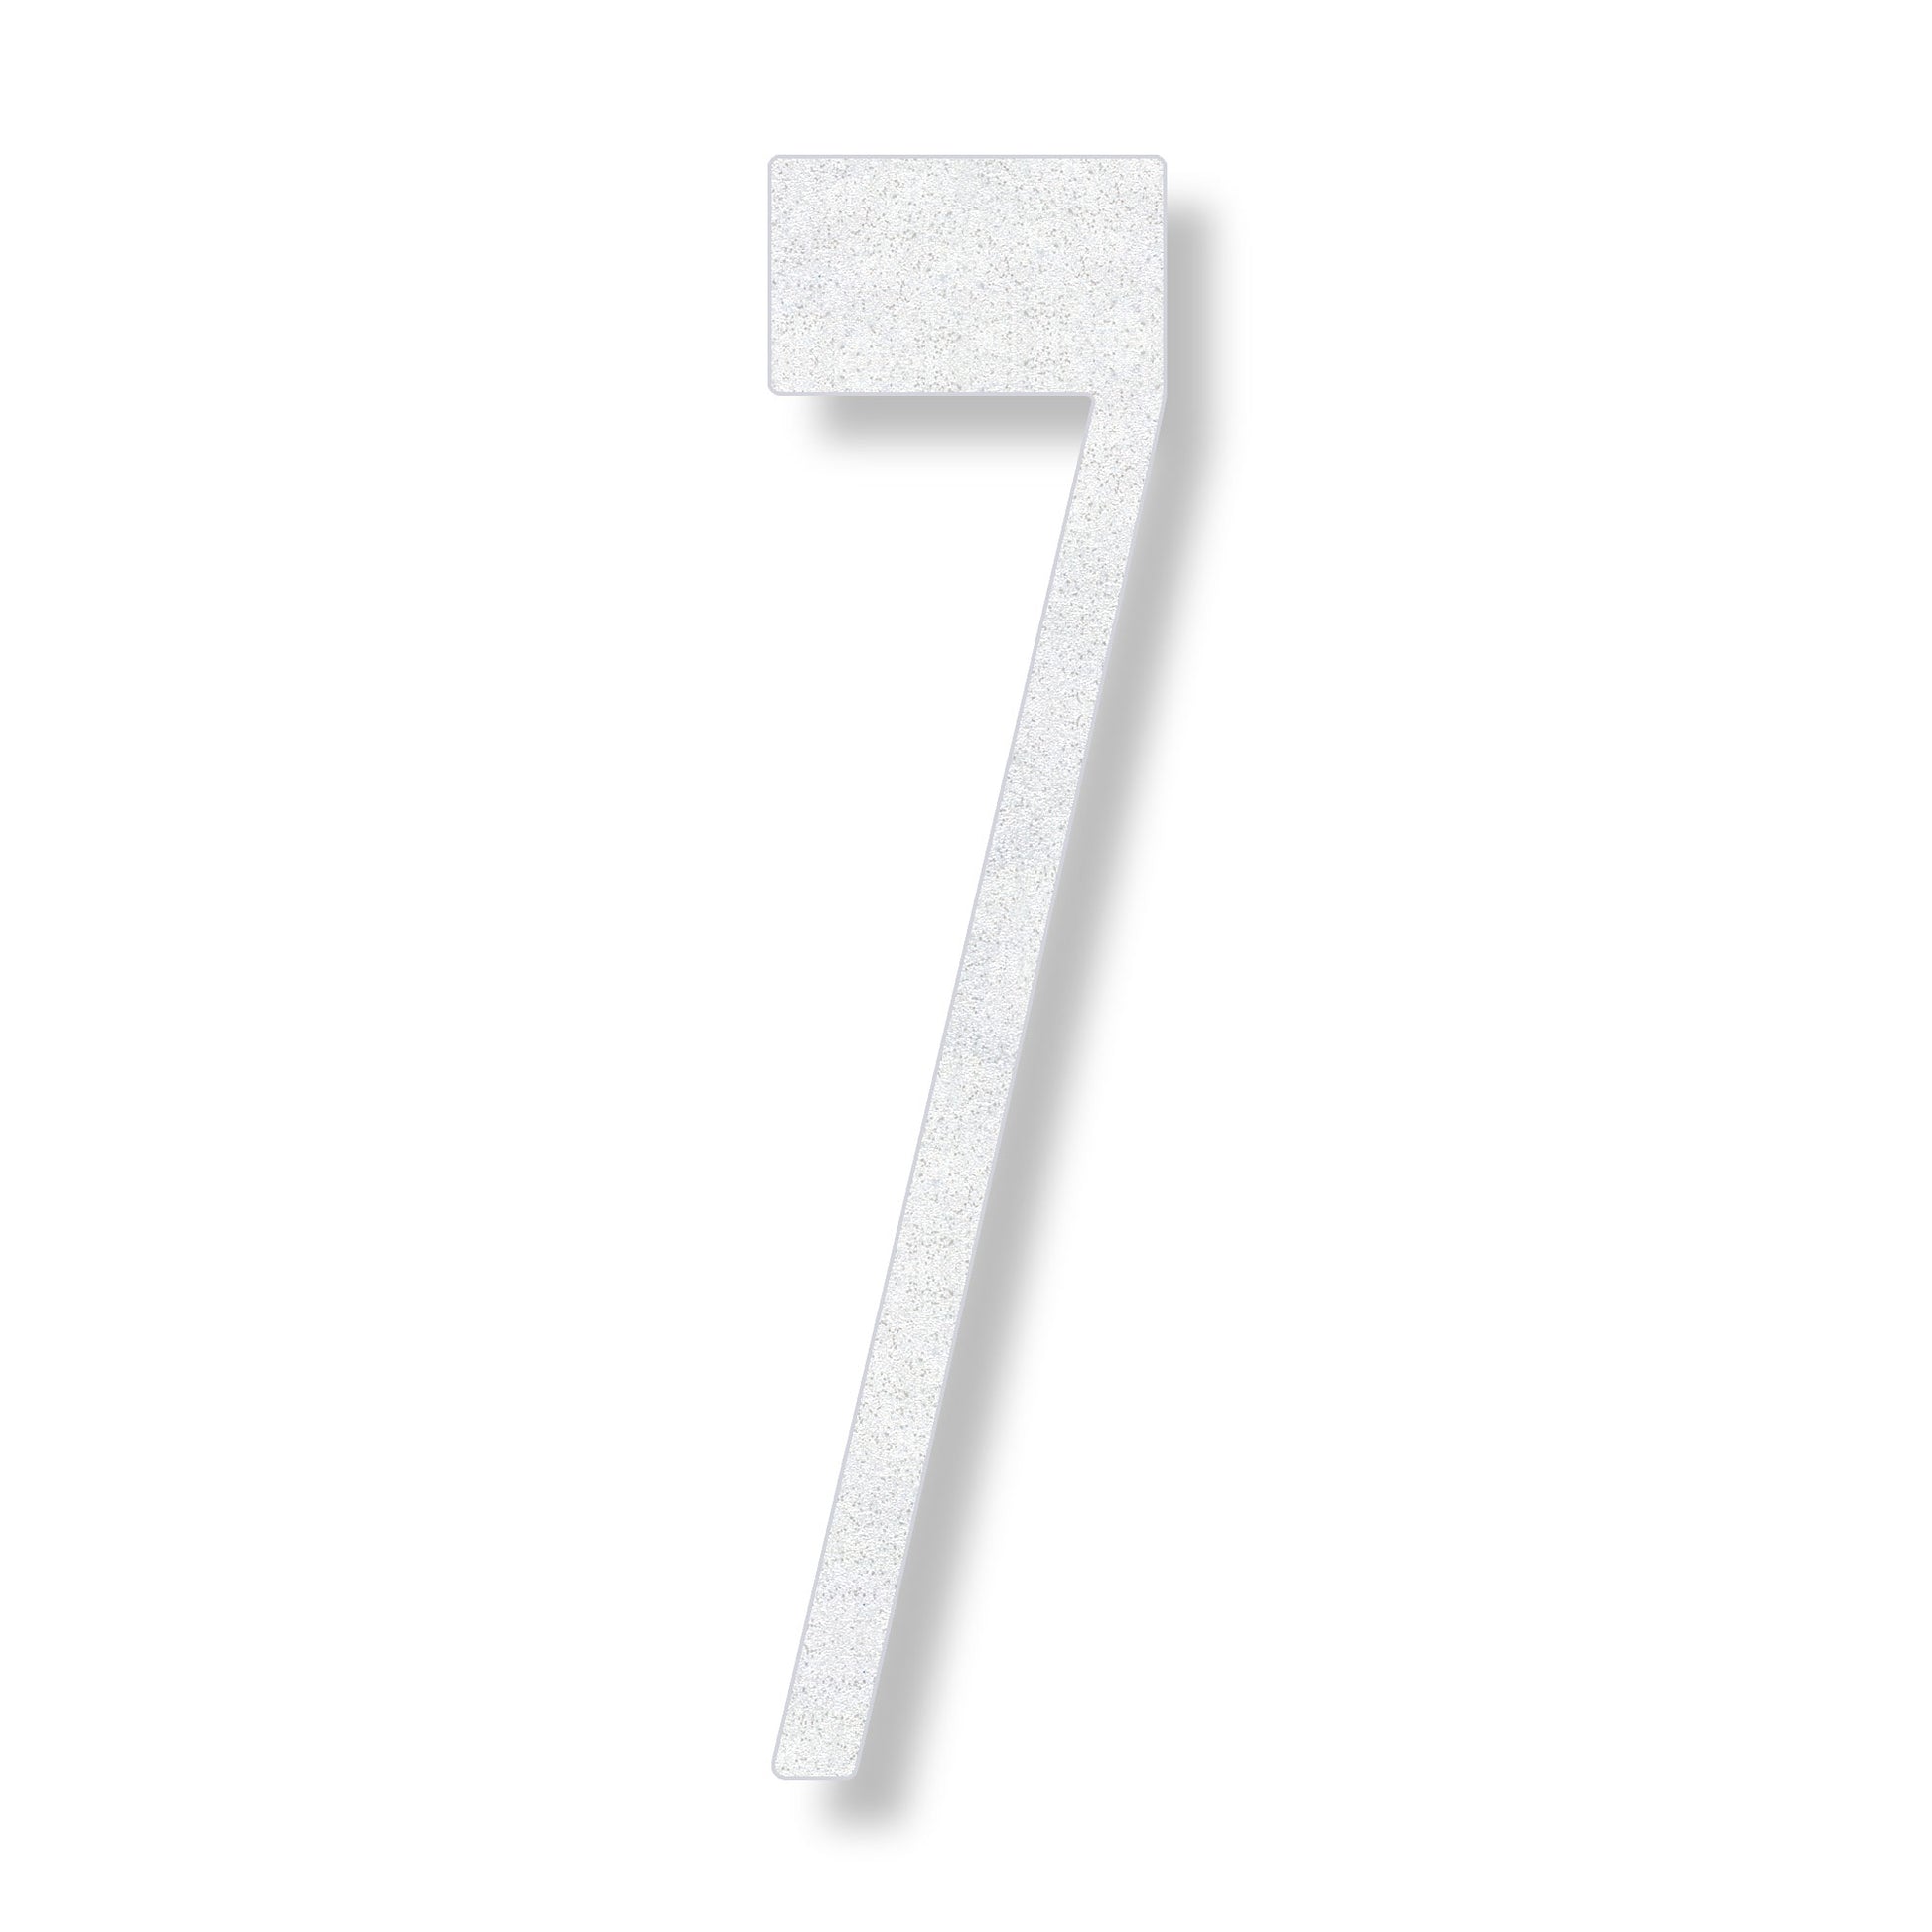 White number 7